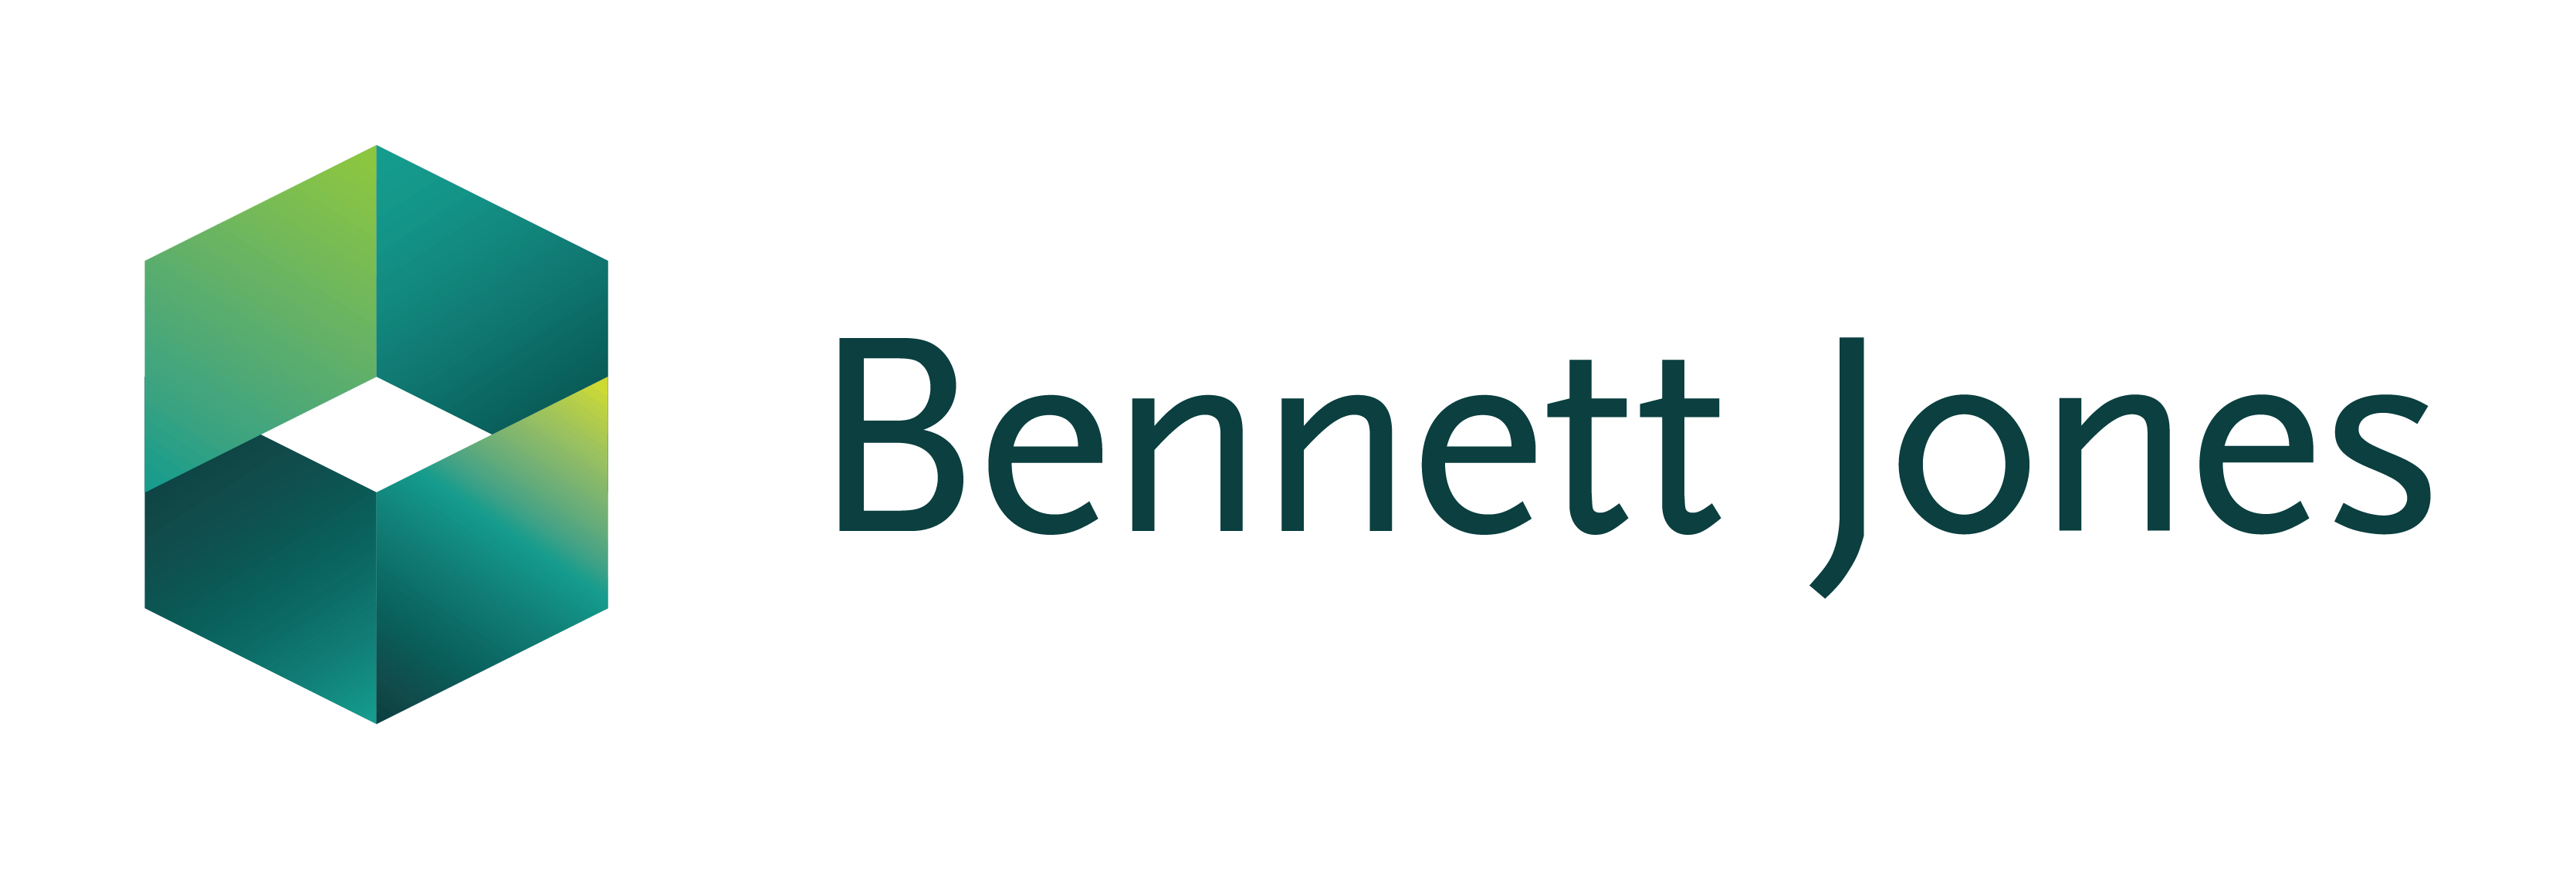 Bennett Jones LLP Logo